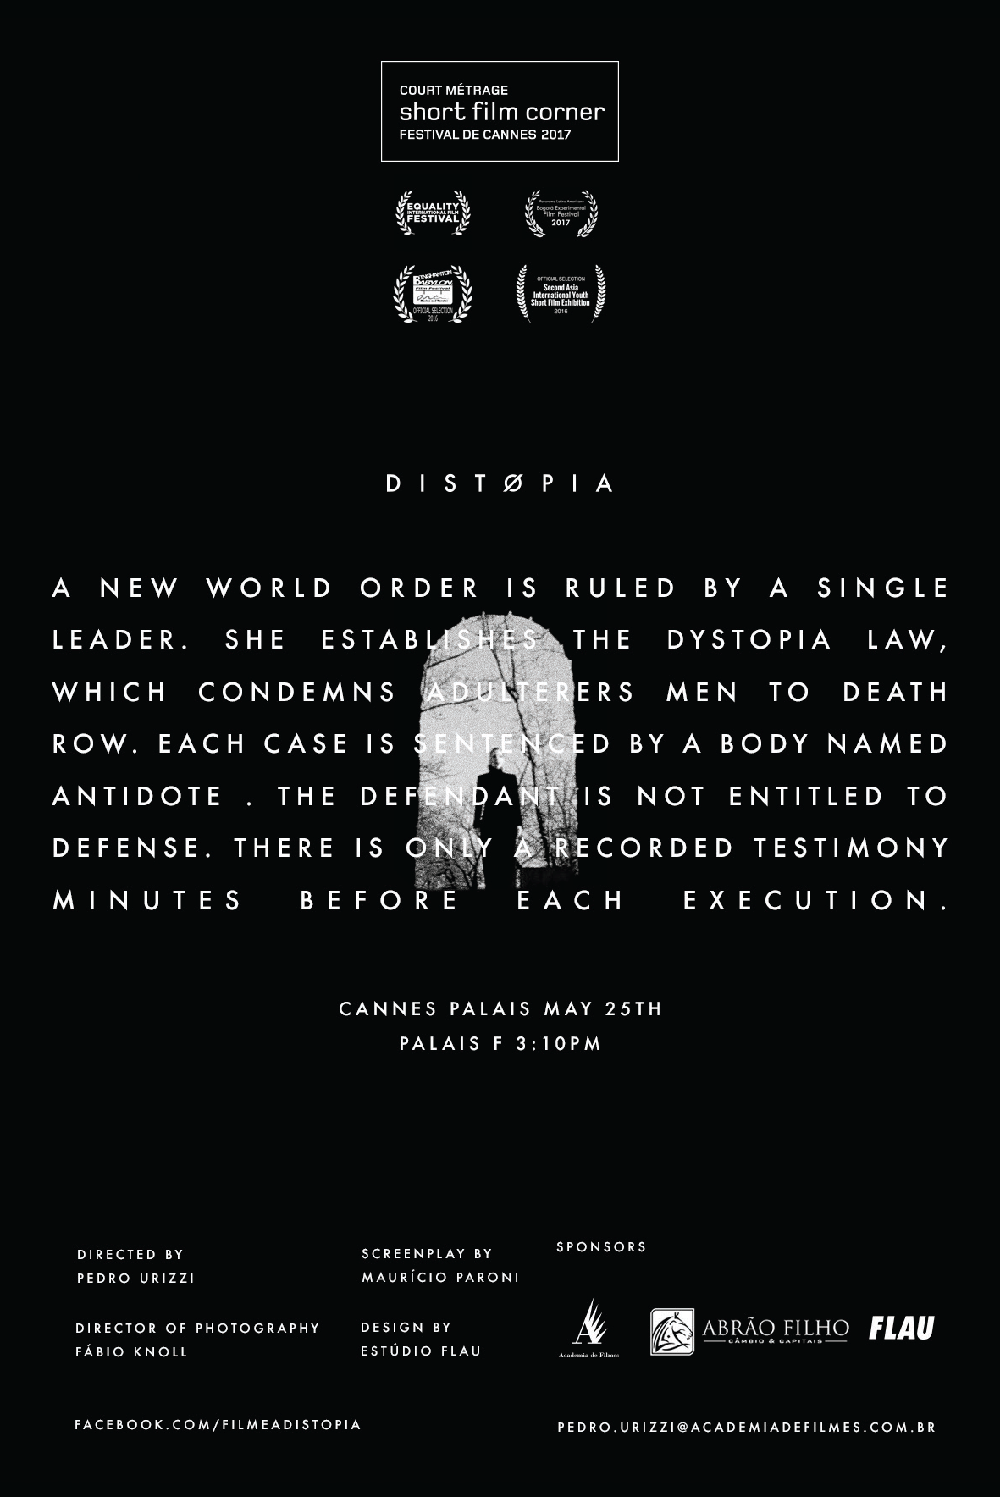 distopia poster cartaz pedro urizzi movie Filme curta short film